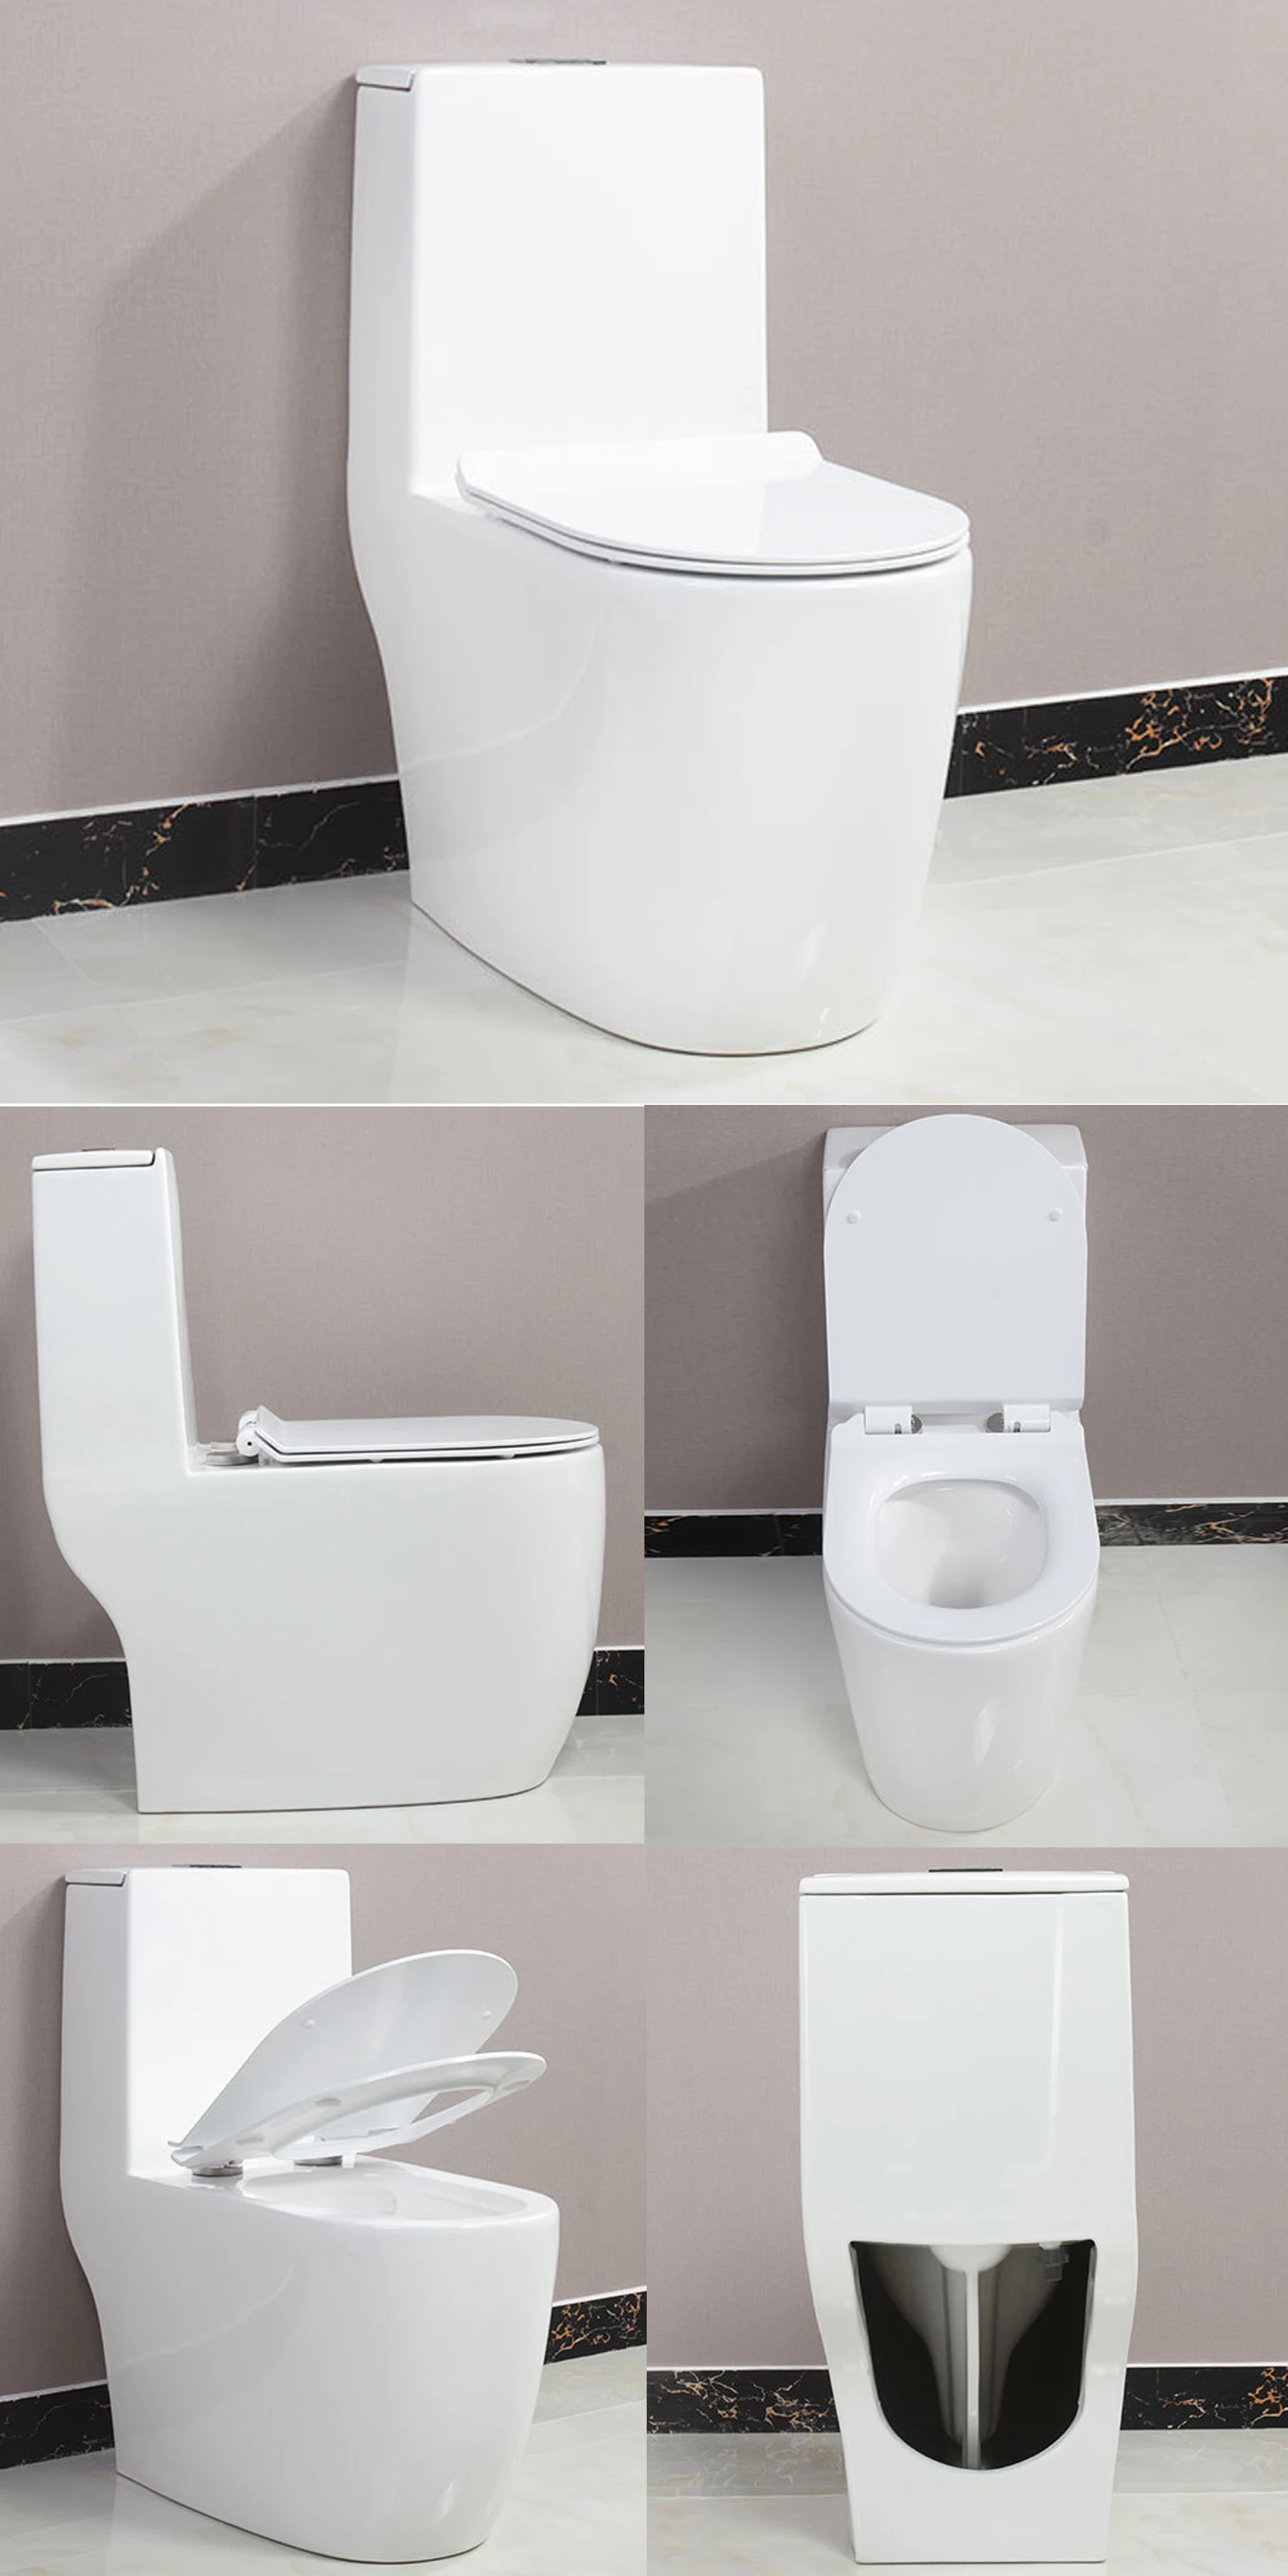 Modern Design Sanitary Ware Set One Piece Toilet Bathroom Floor Mounted Chinese Ceramic Wc Toilet 1012